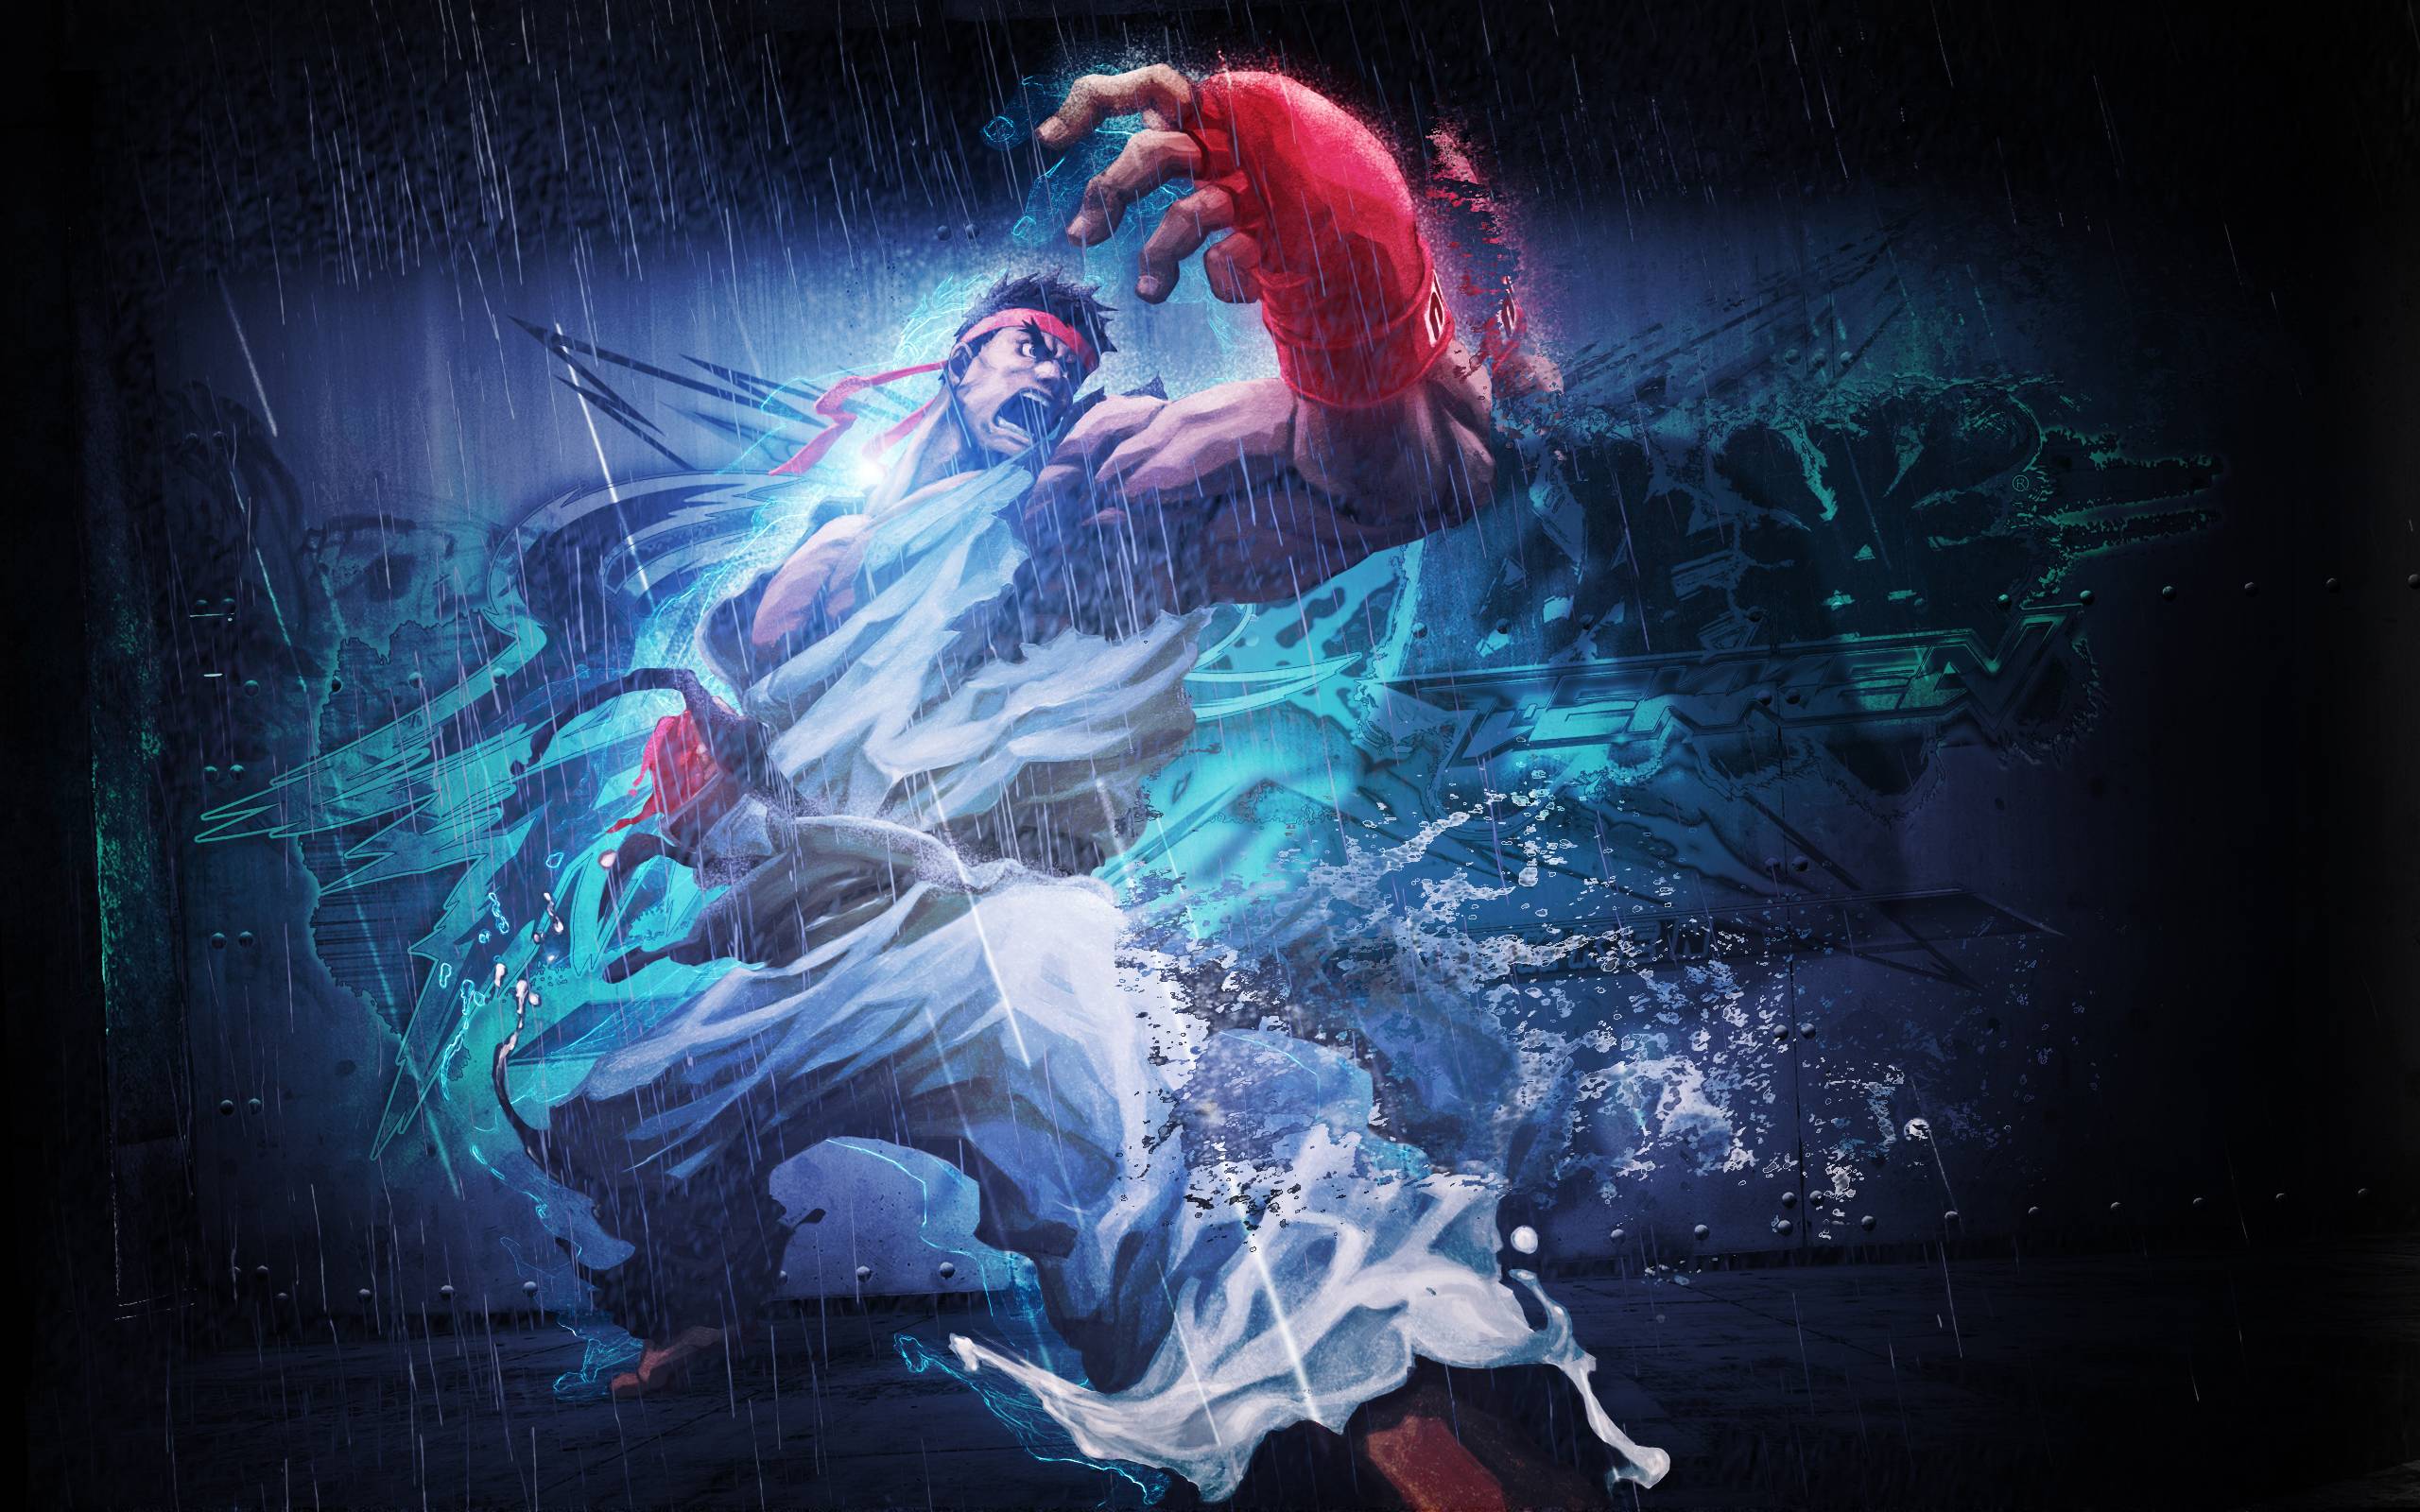 Street Fighter HD Wallpaper